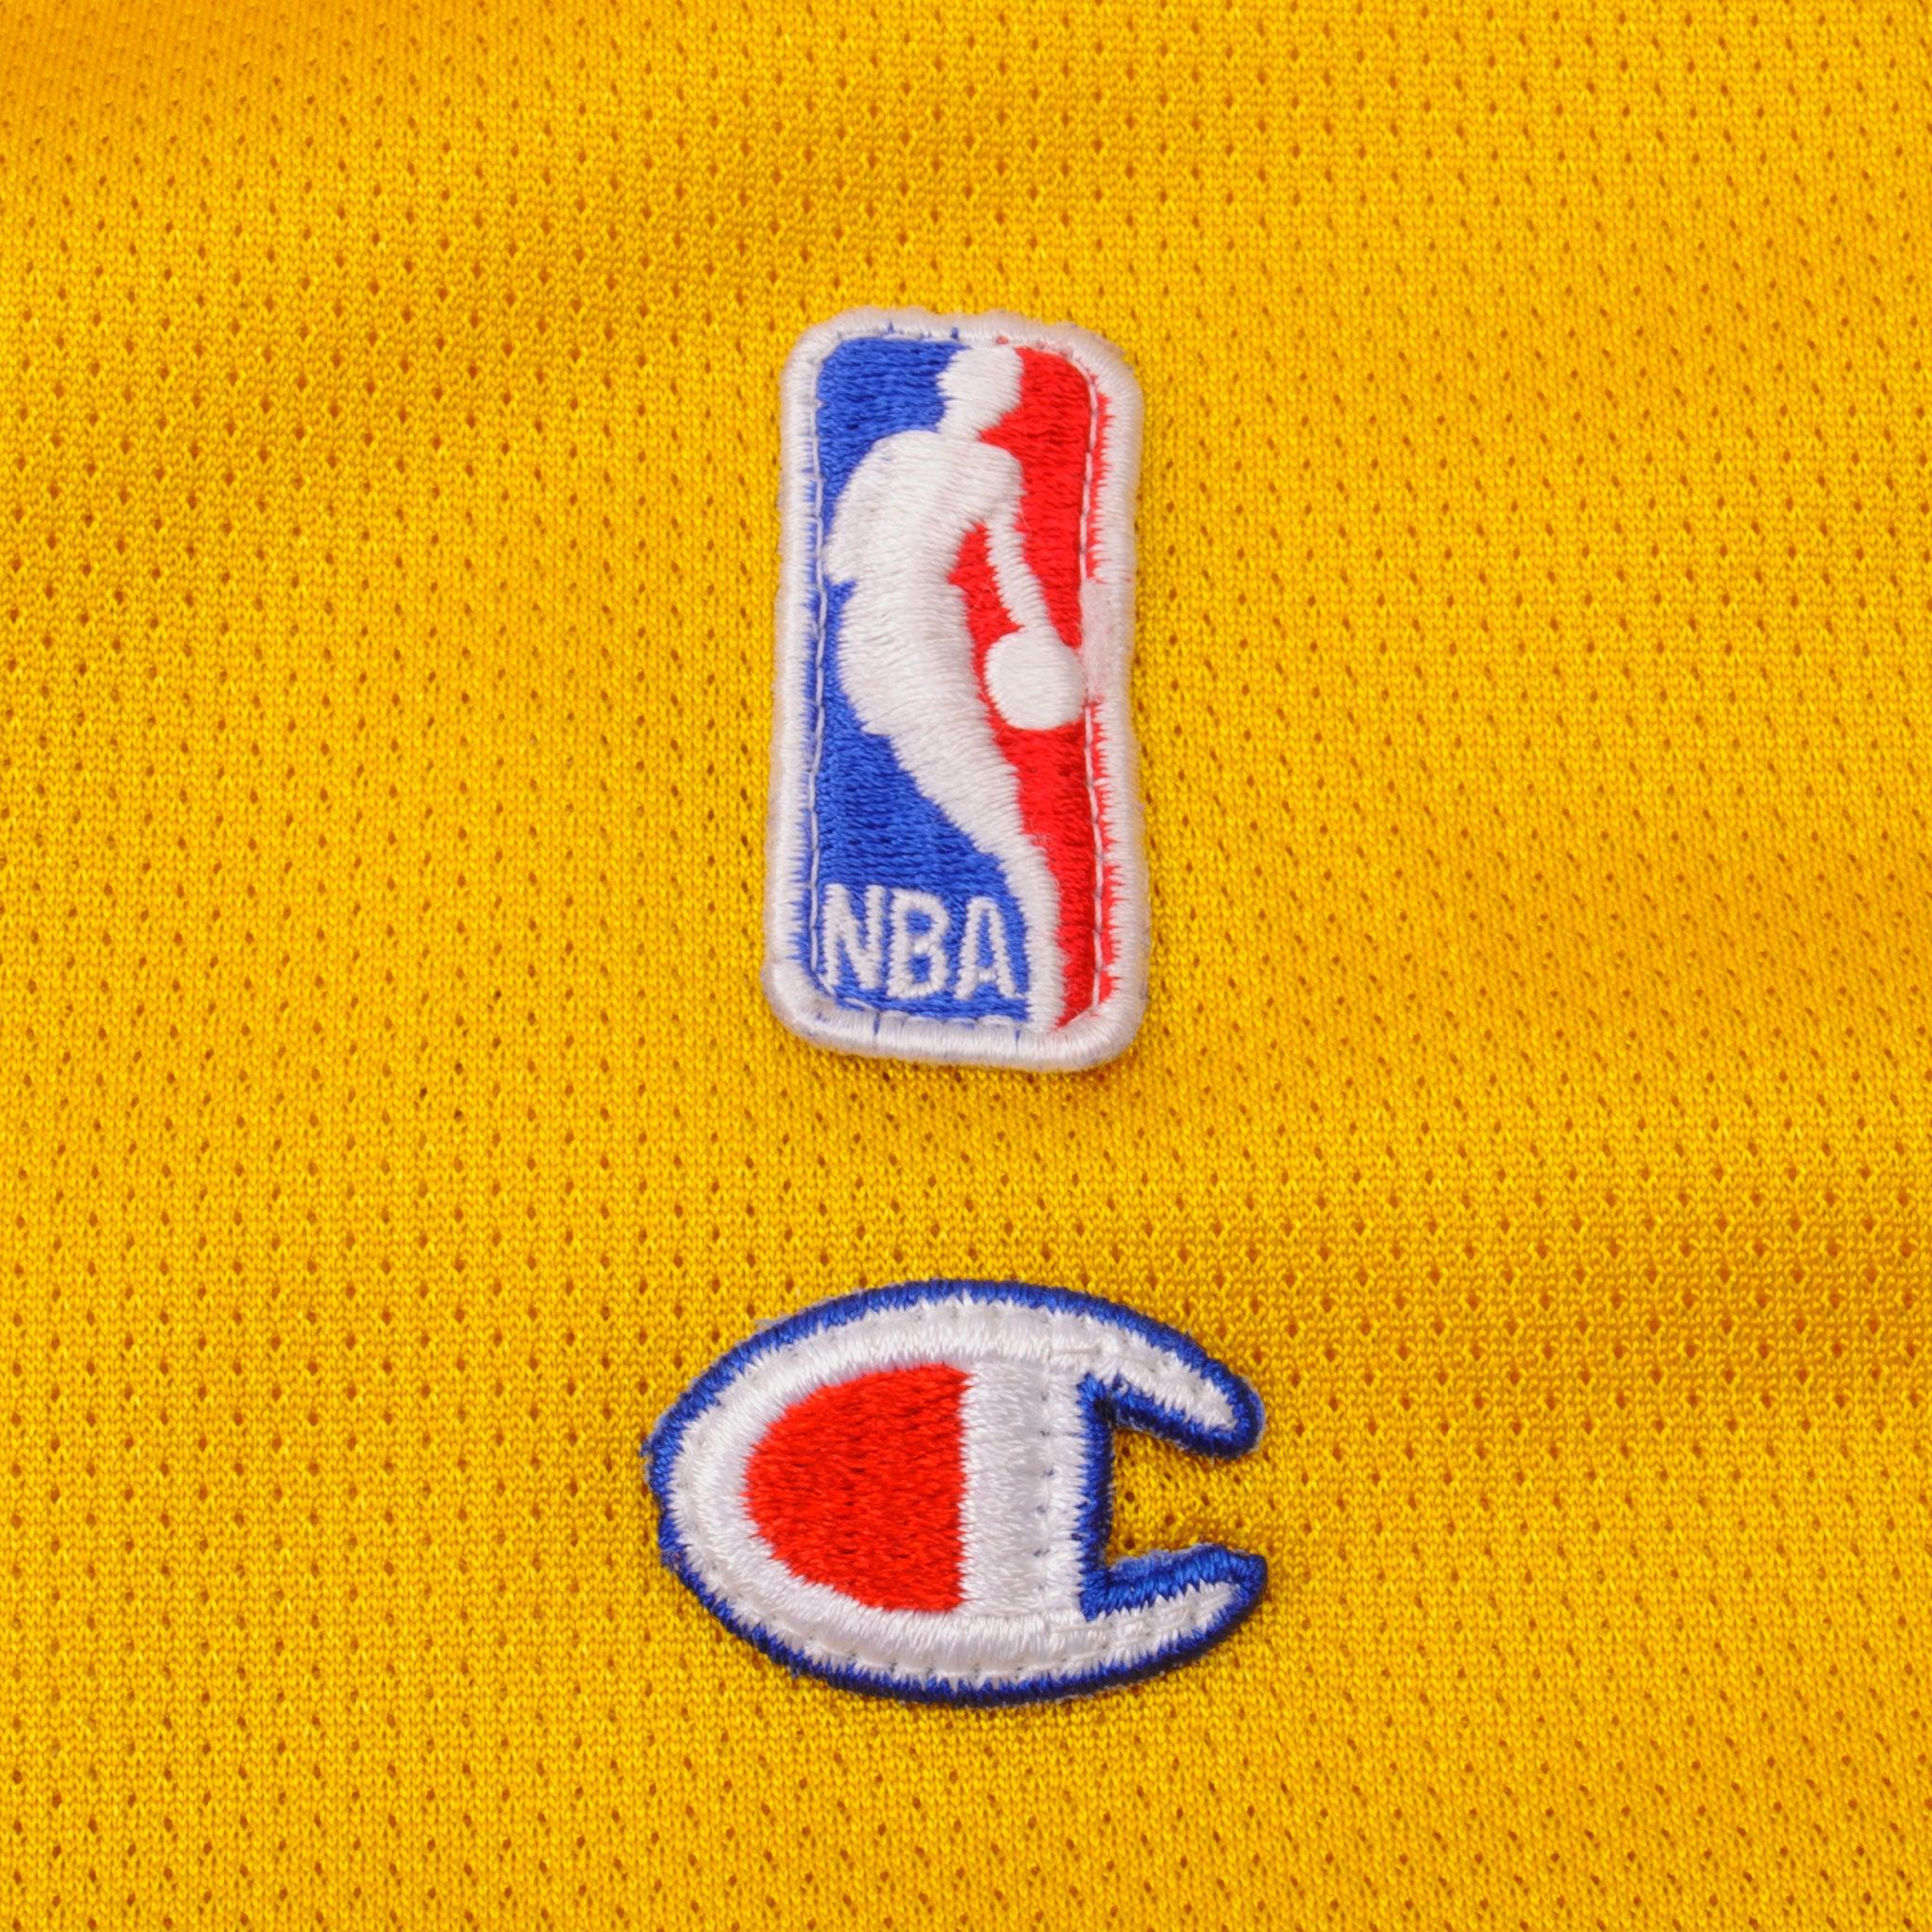 Kobe Bryant Jersey Page  La lakers jersey, Kobe bryant wallpaper